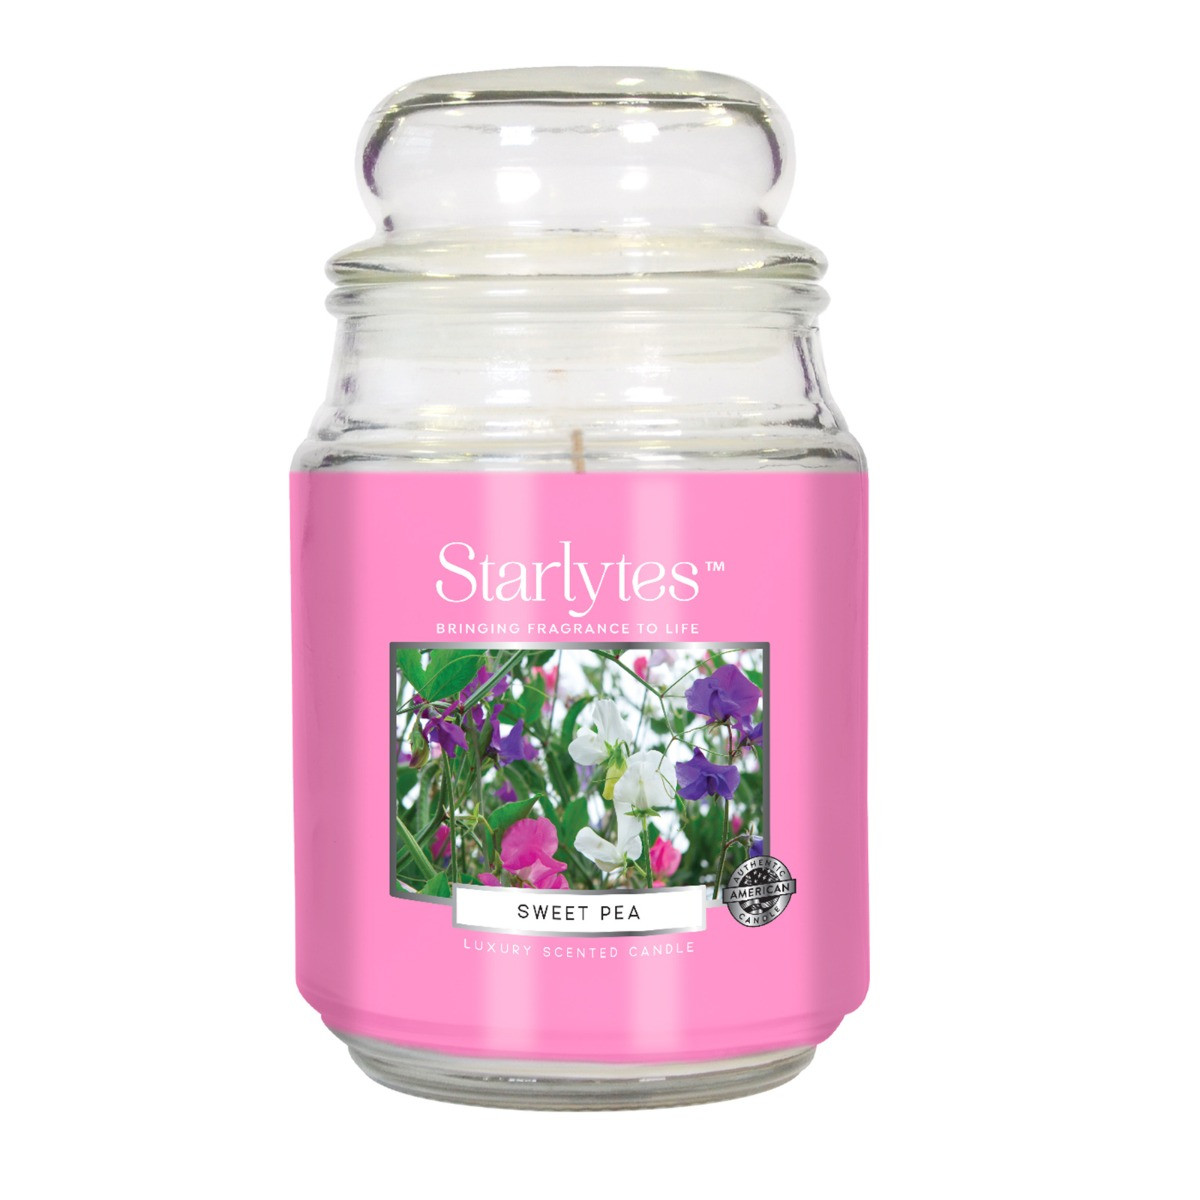 Starlytes 18oz Jar Candle - Sweet Pea>